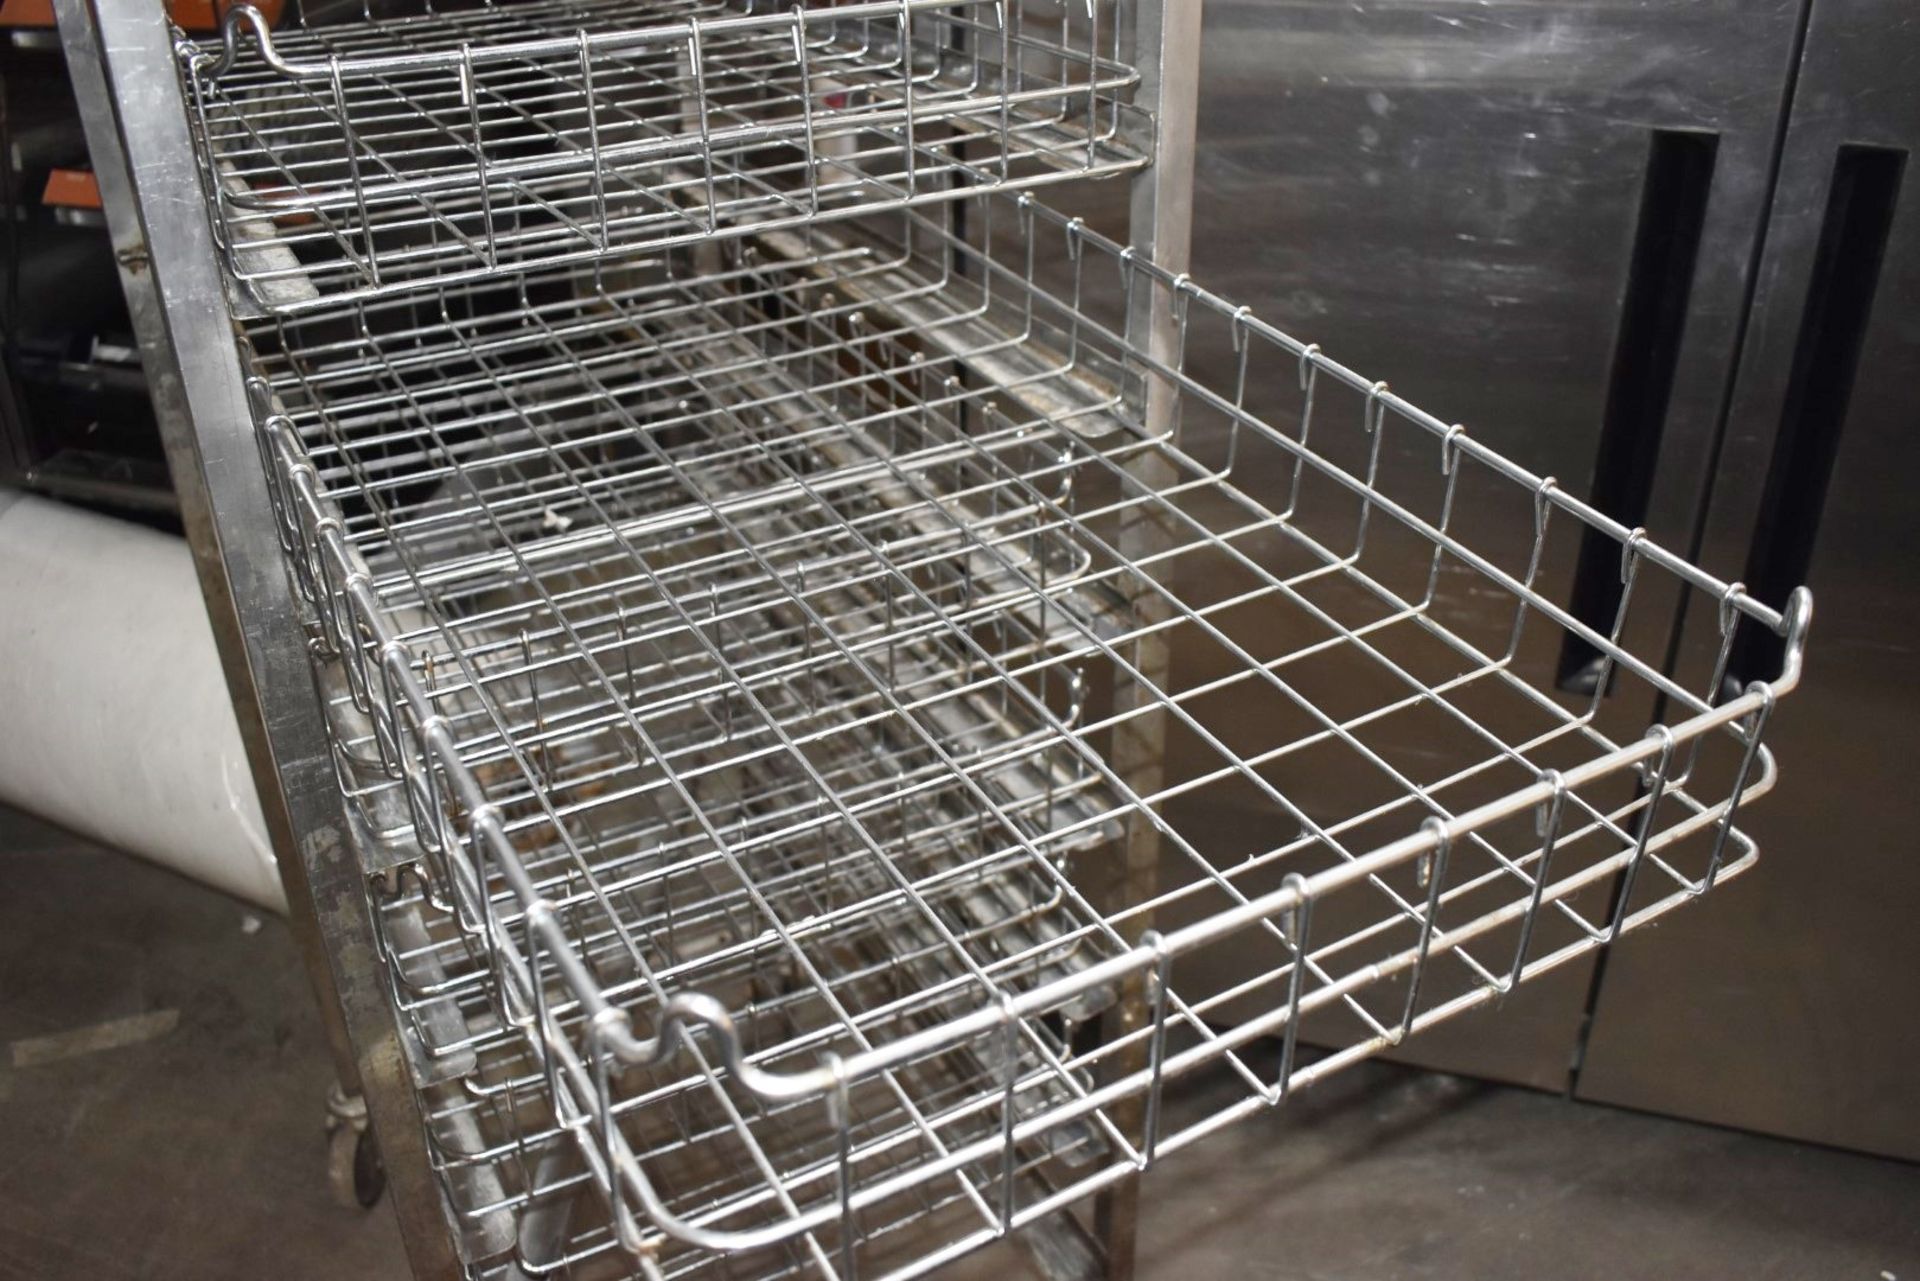 1 x Upright Mobile 10 Tier Shelf Rack With 9 x Chrome Storage Baskets - Dimensions: H180 x W46 x D75 - Image 2 of 5